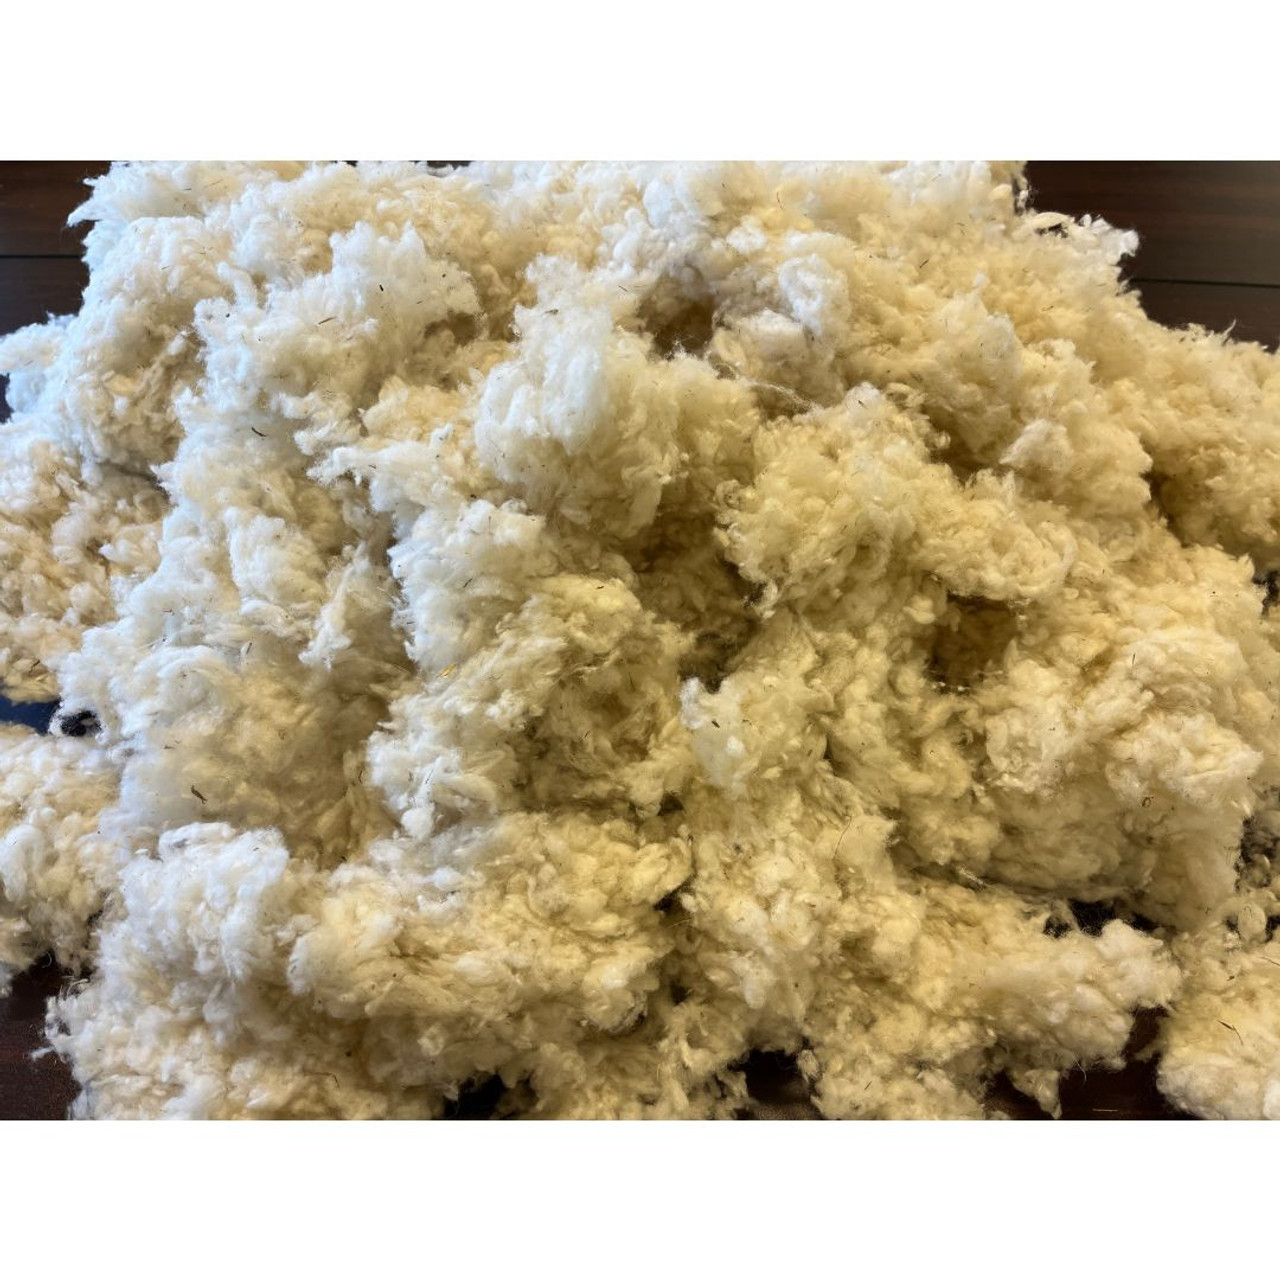 Fluffy Wool Pillows from Yarn Waste - CeCe's Wool